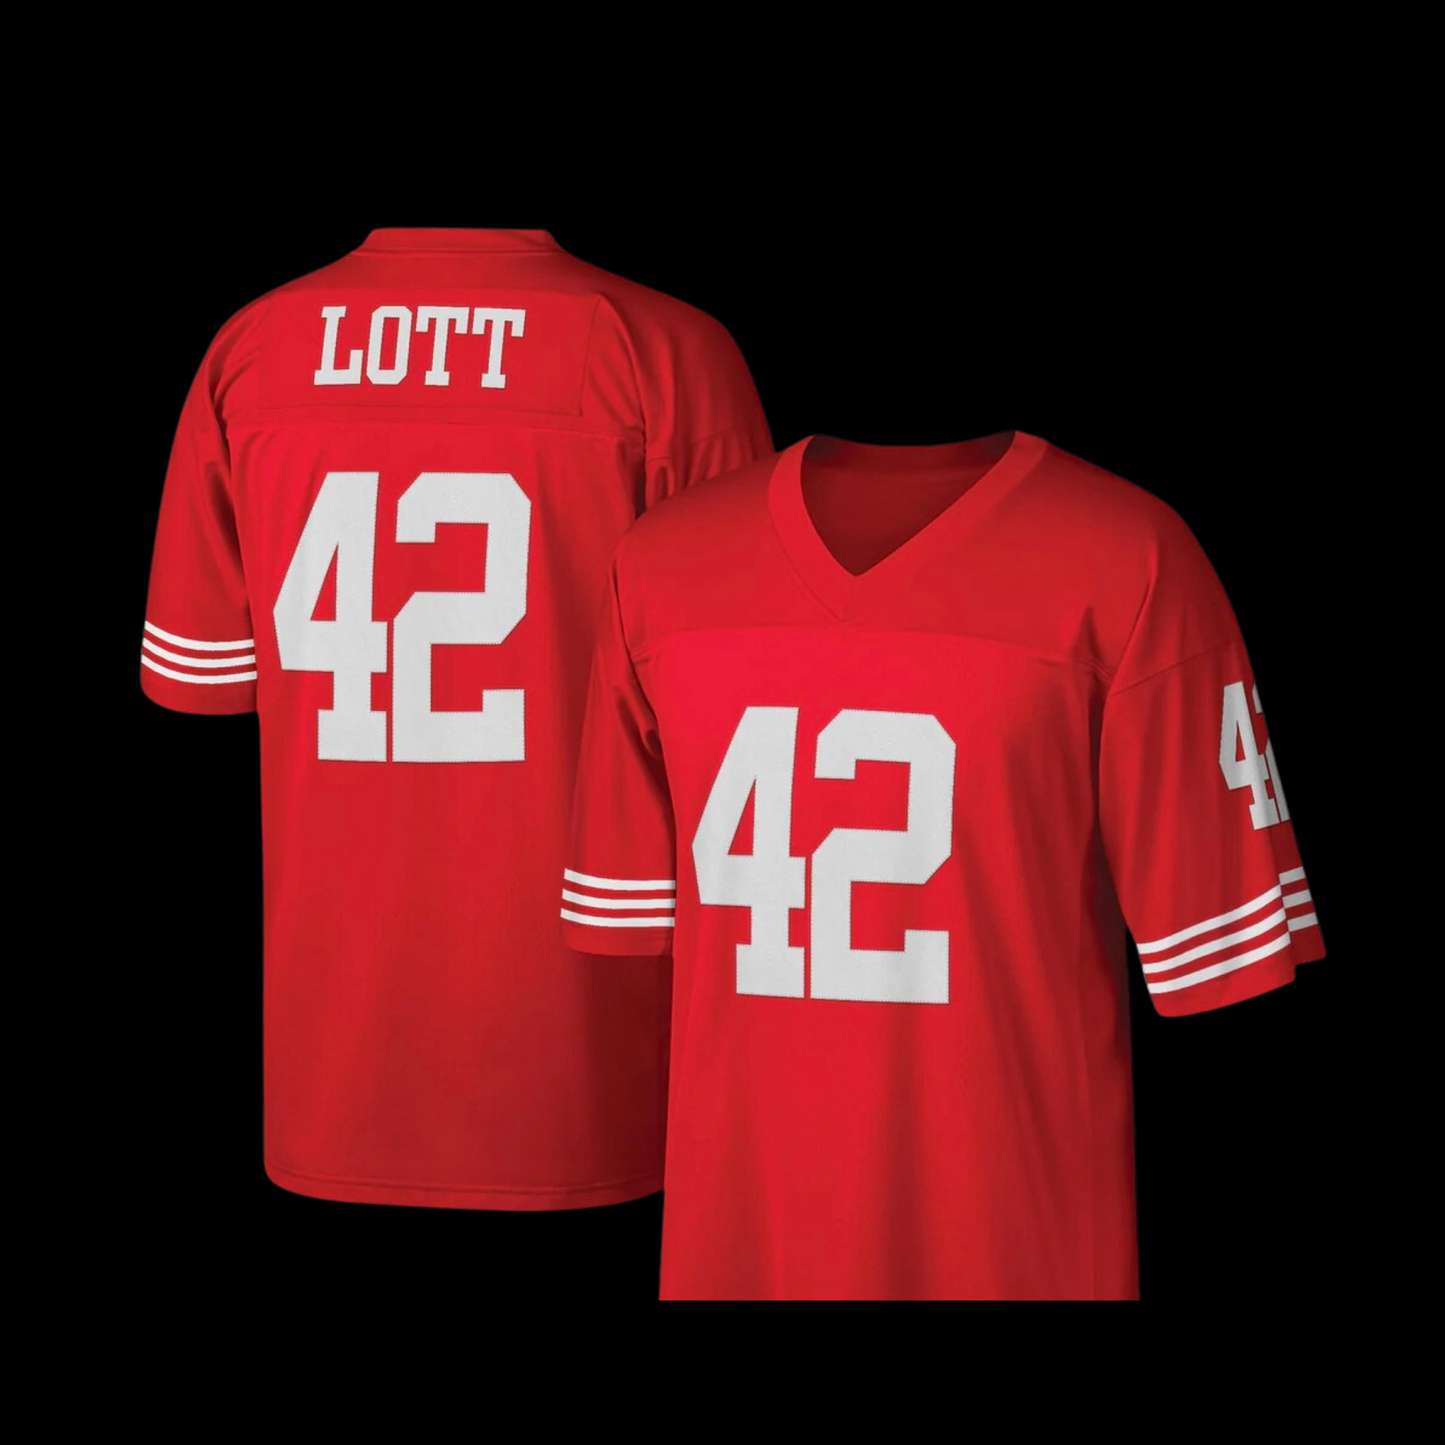 #42 Lott Stitched Men’s 49ers jersey